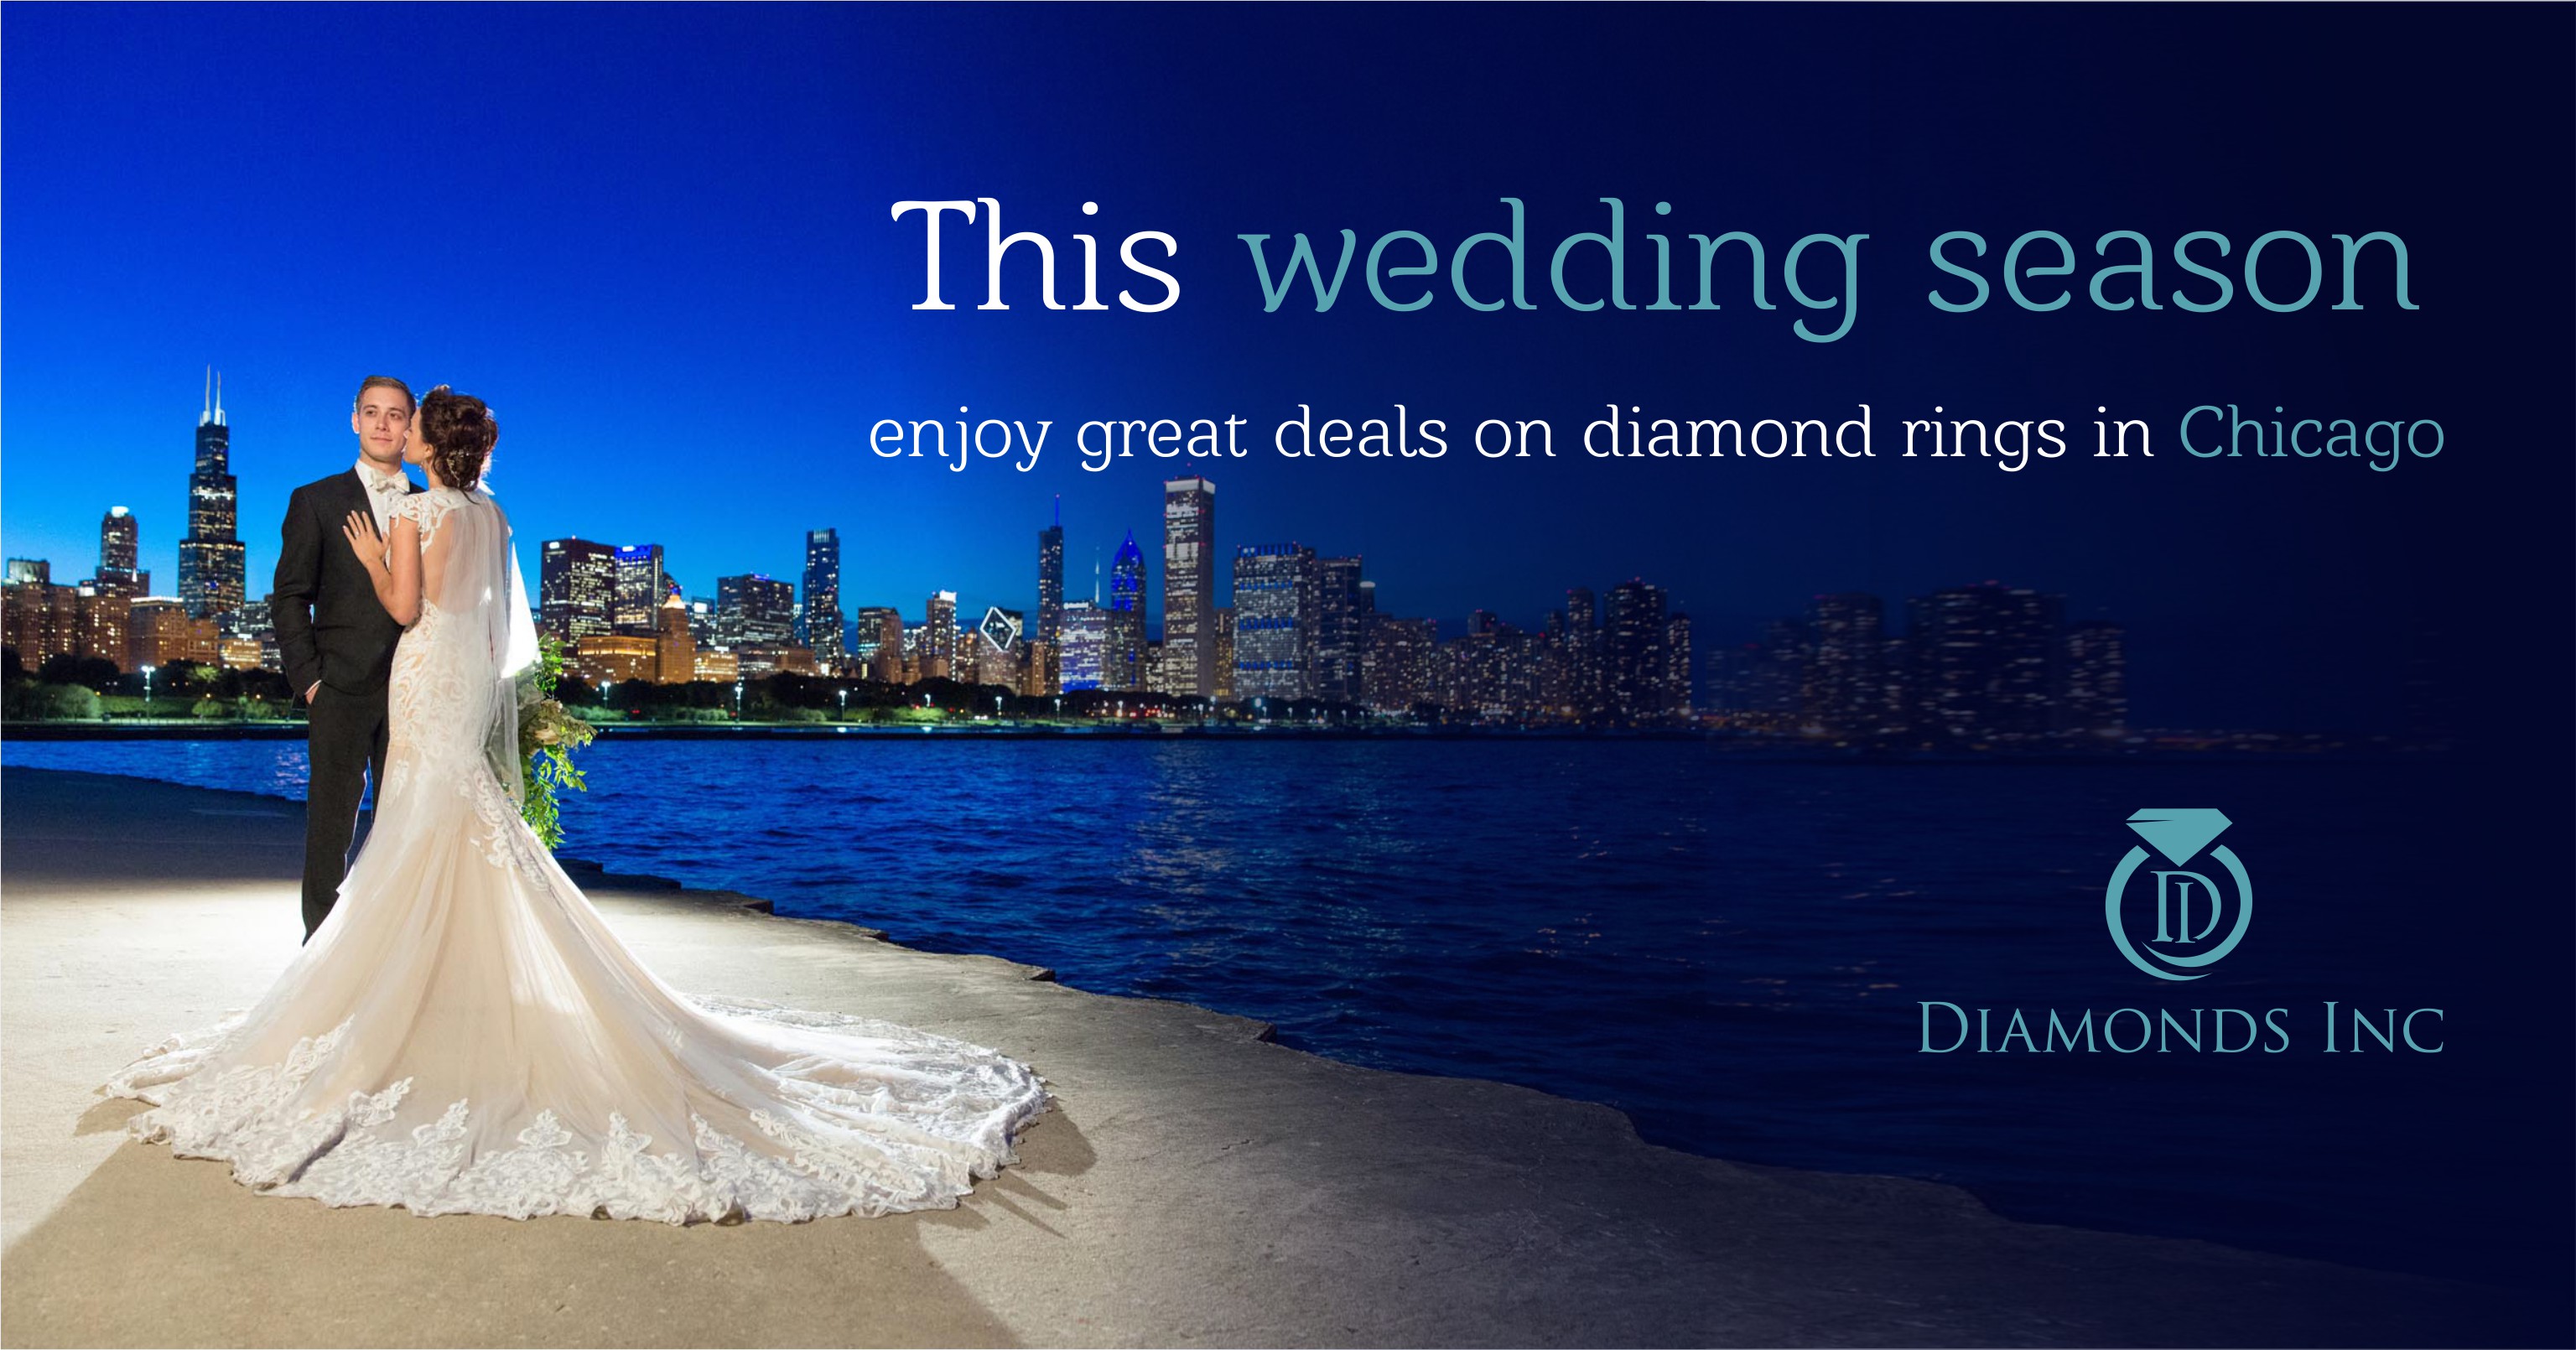 This wedding season enjoy great deals on diamond rings in Chicago